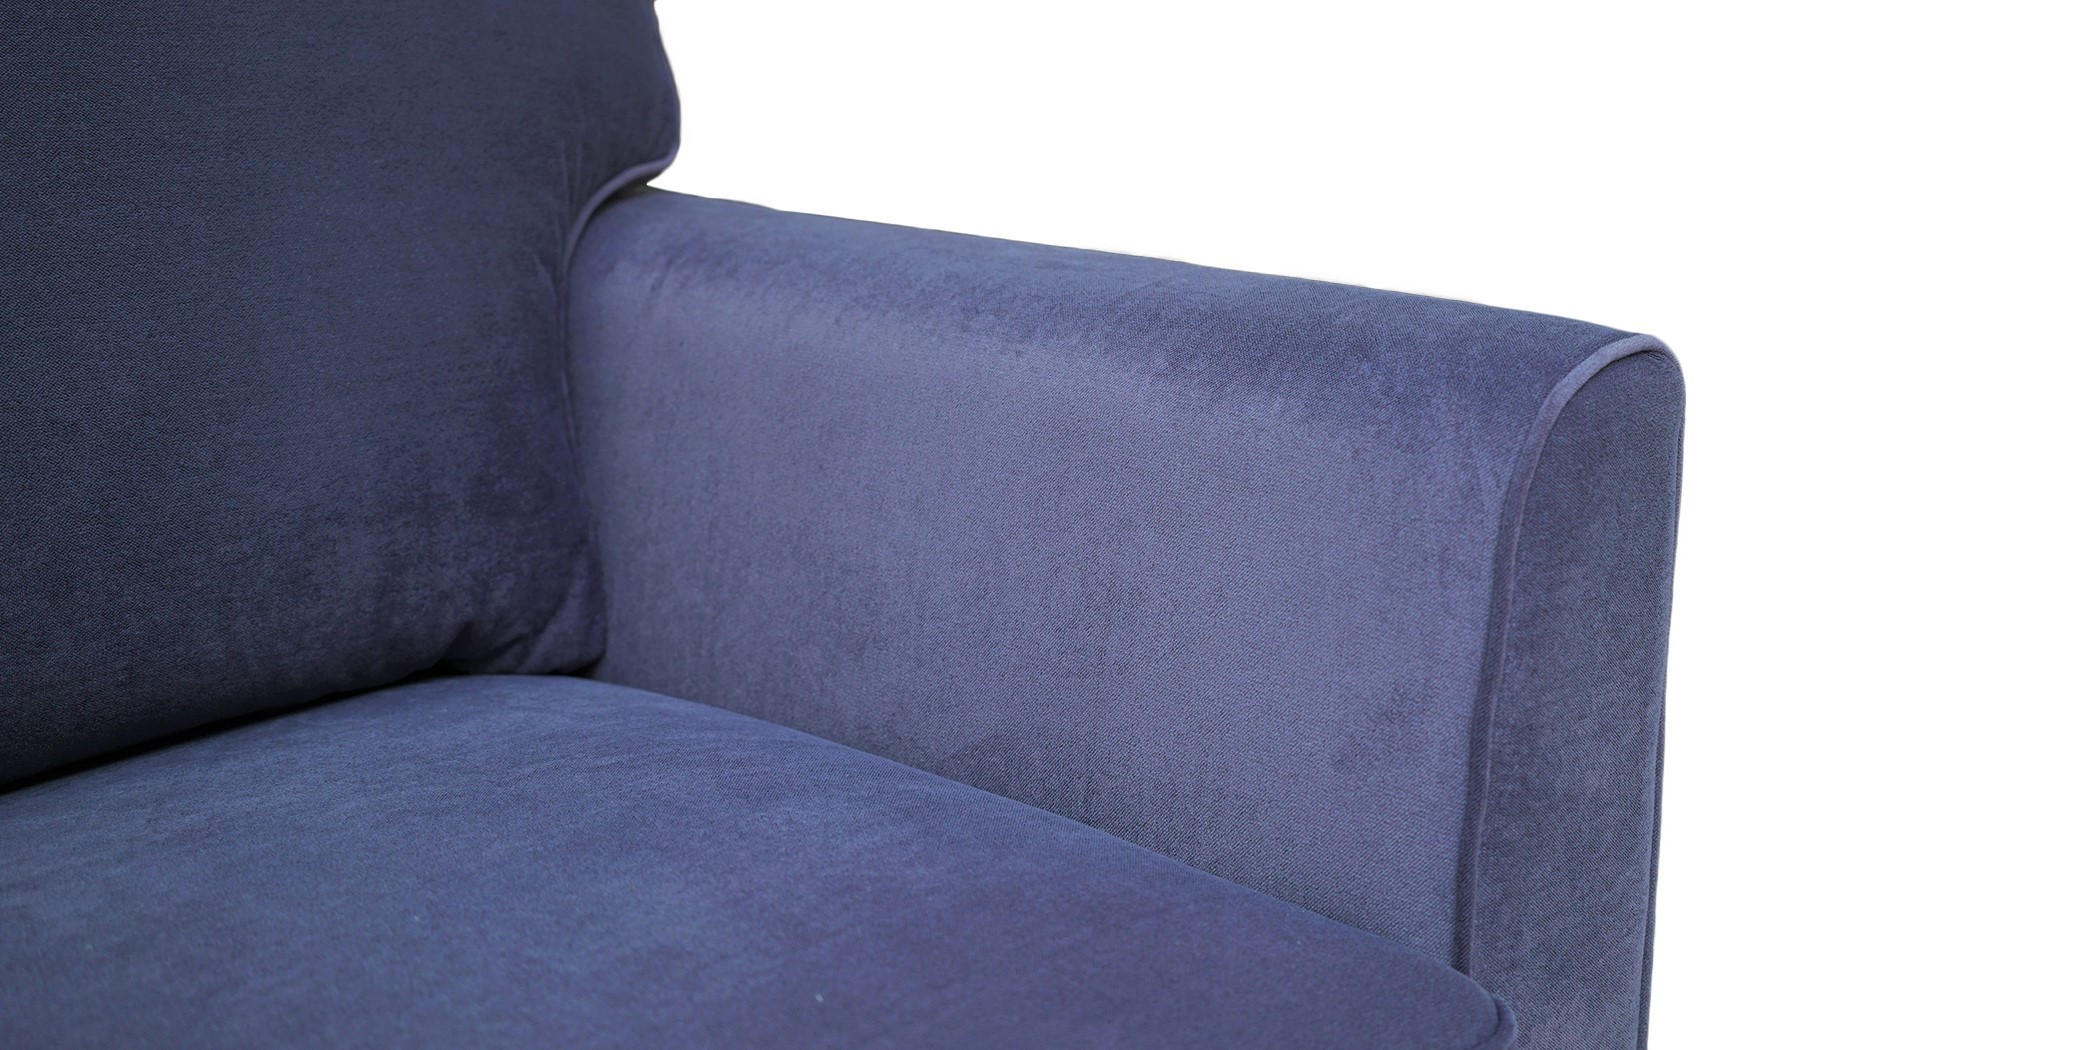 Verona Sofa 3+2+1 Purple Fabric